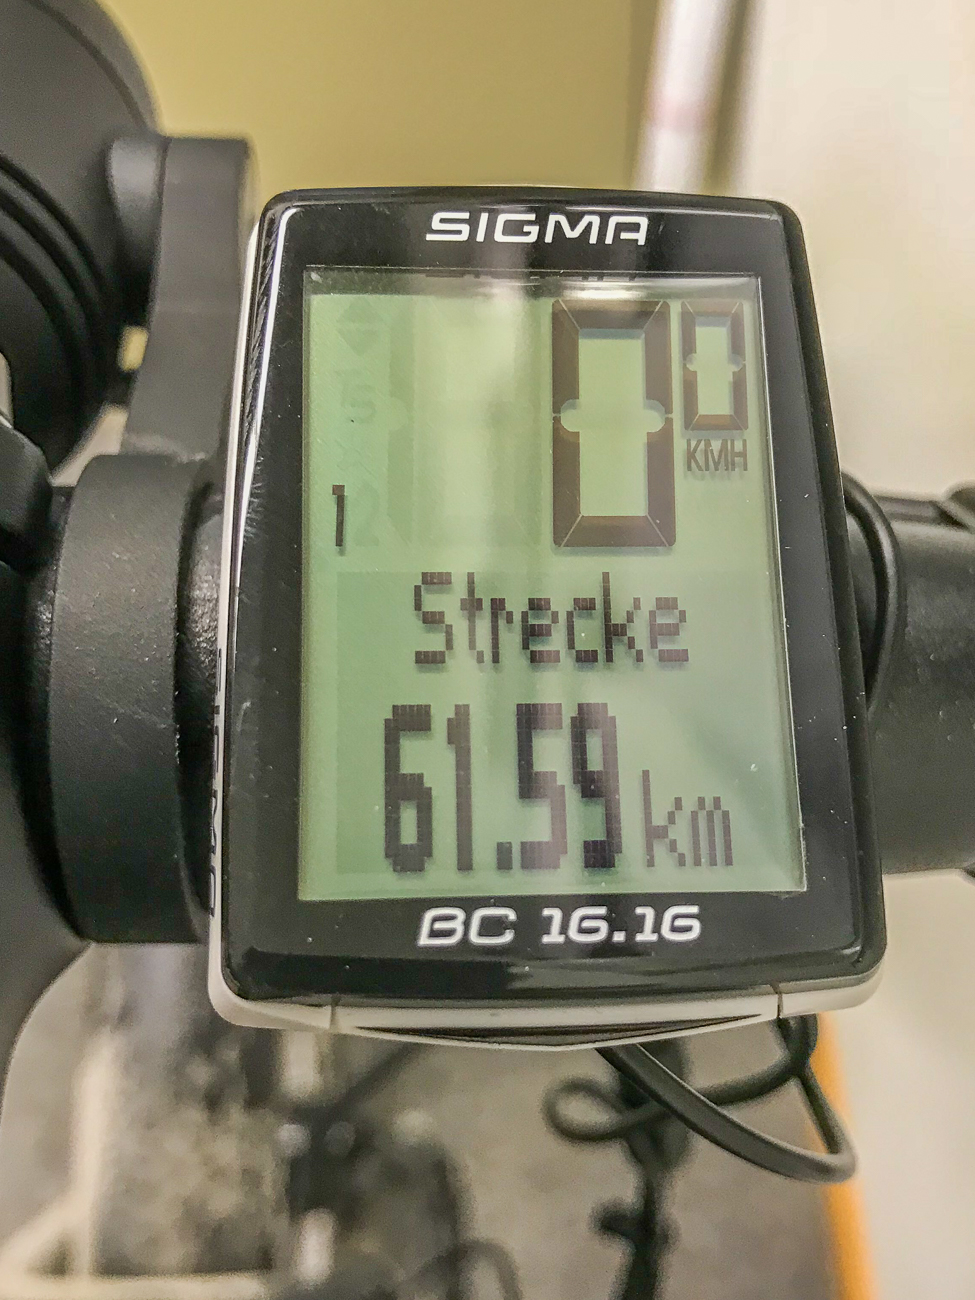 Fahrradtacho Sigma BC 16.16, mit Temperaturanzeige